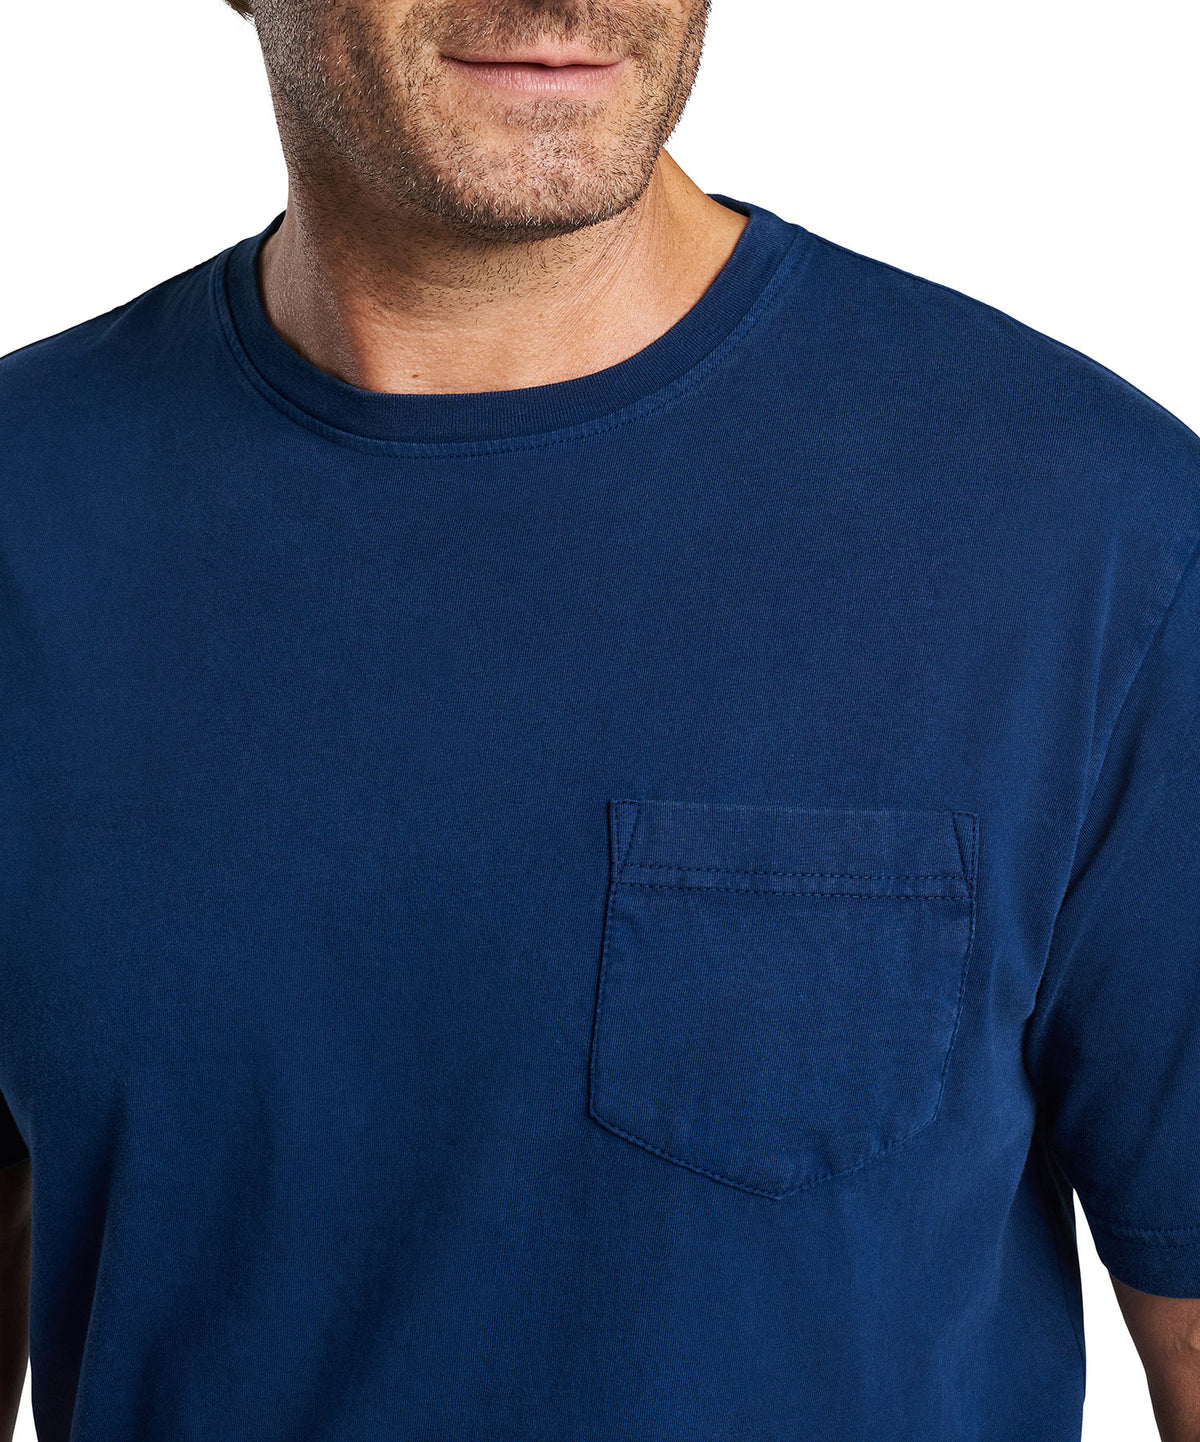 Peter Millar Short Sleeve Lava Wash Crew Neck Pocket T-Shirt, Men's Big & Tall